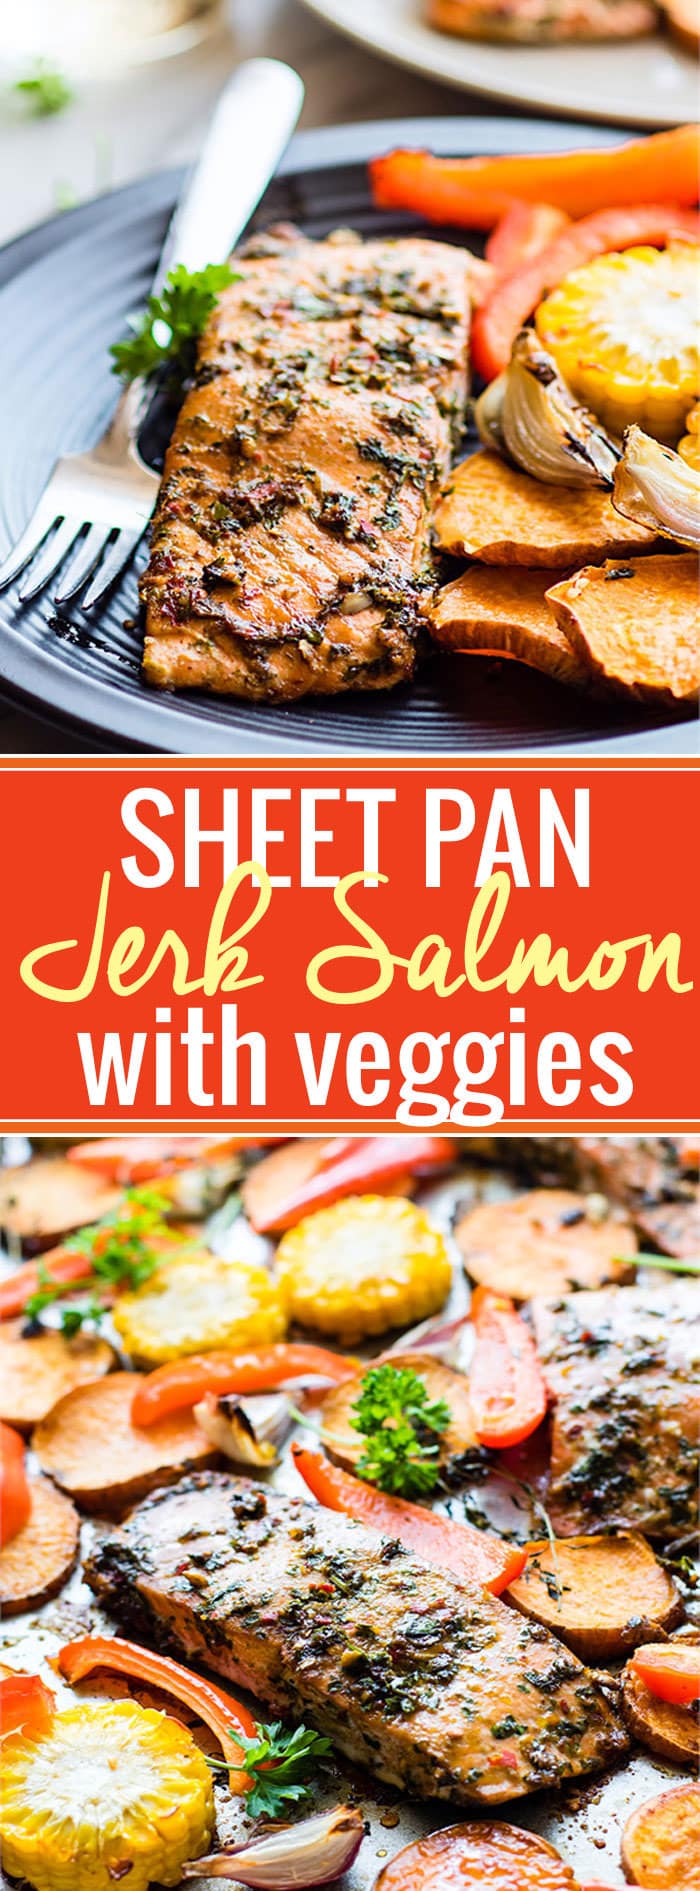 Easy Sheet Pan Jerk Salmon with Veggies! Flavorful Jerk salmon recipe with seasonal veggies baked all on one sheet pan. @cottercrunch